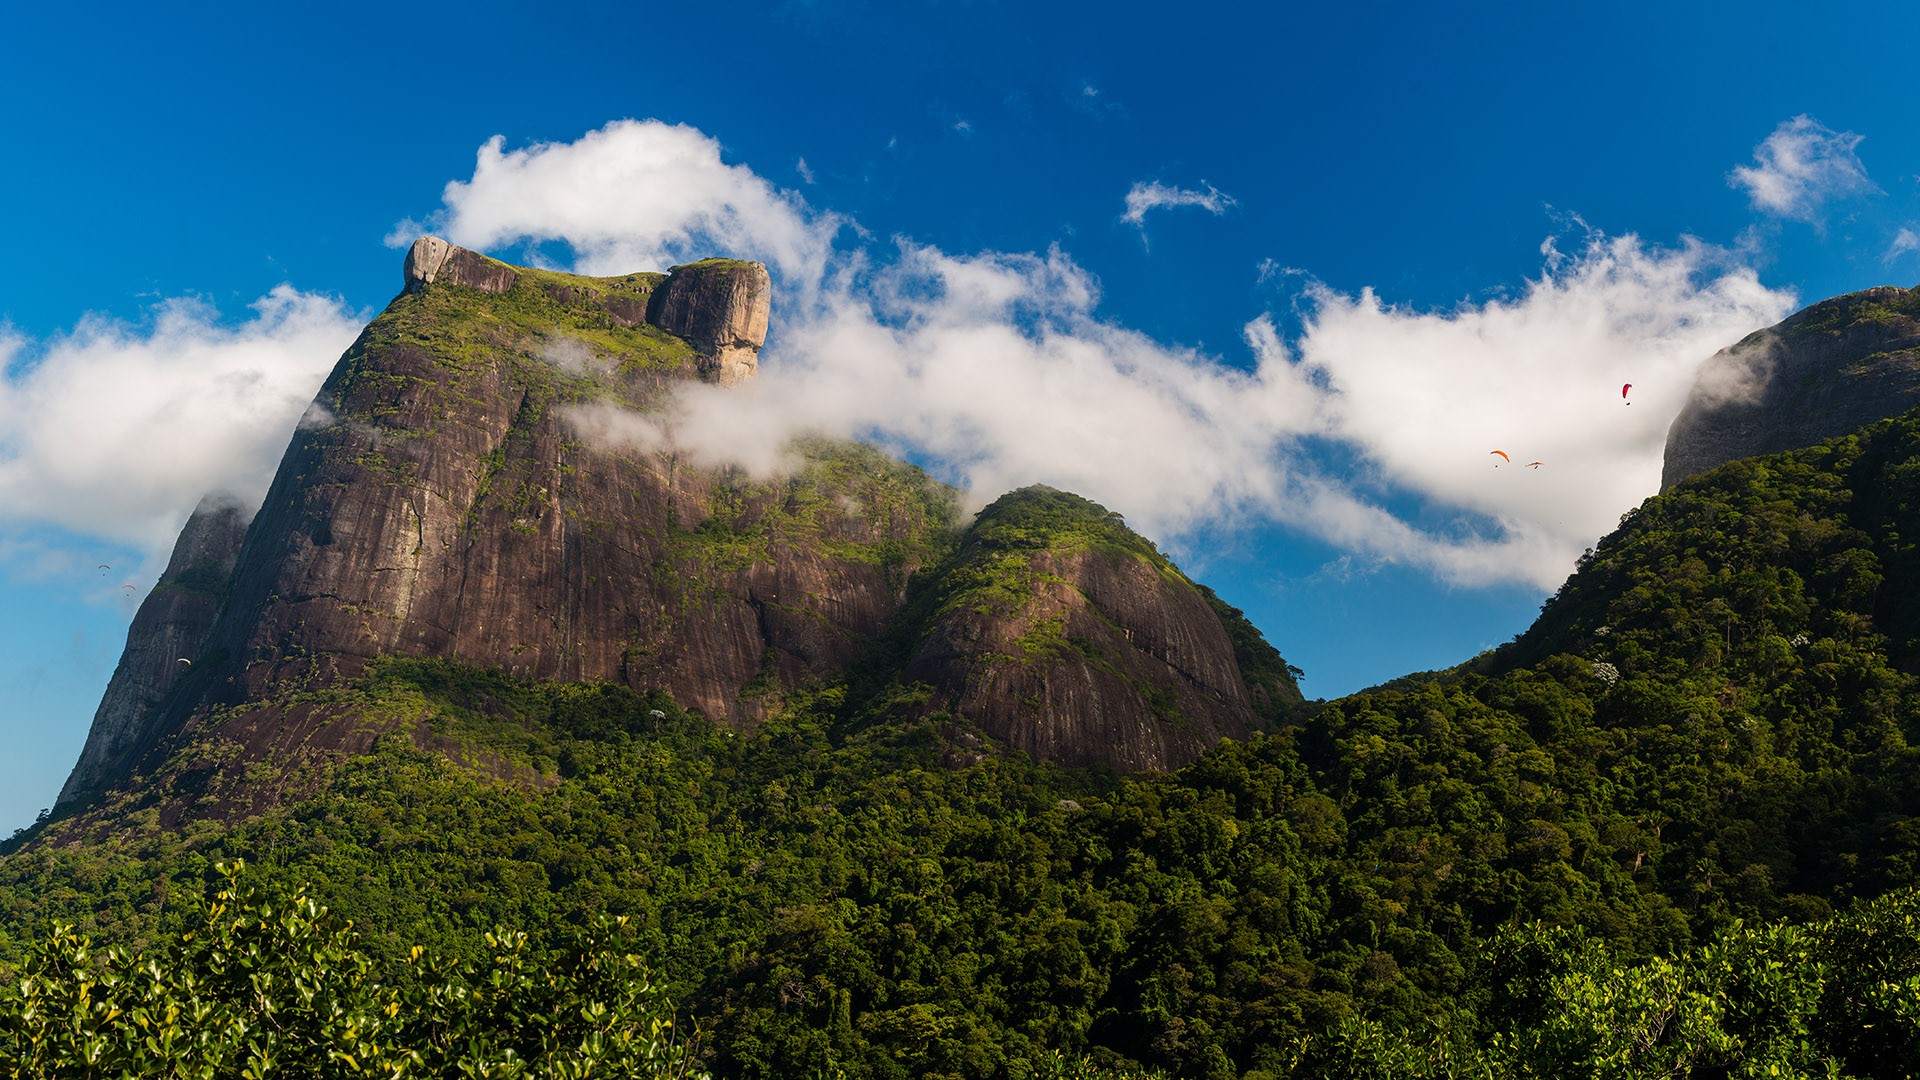 Pedra da Gávea monolithic mountain, Tijuca National Park, Rio de Janeiro, Brazil | Windows 10 ...